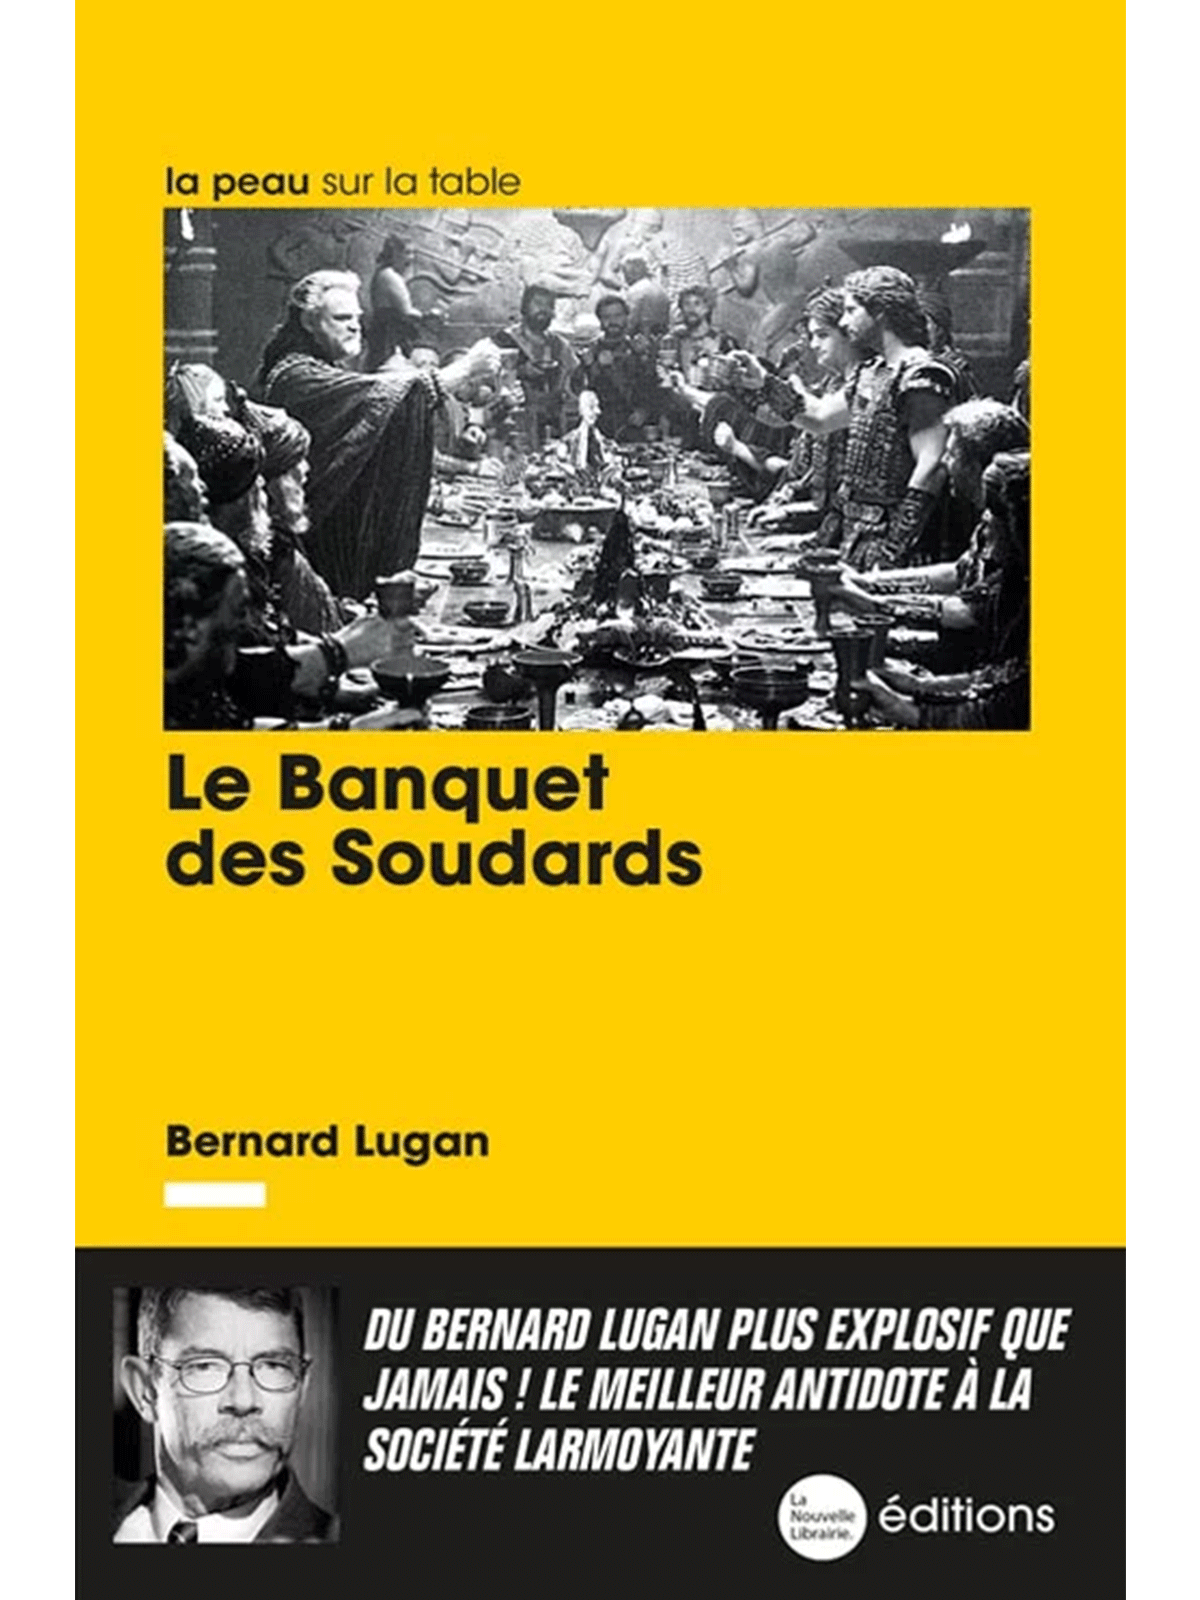 Bernard Lugan : Le Banquet des Soudards